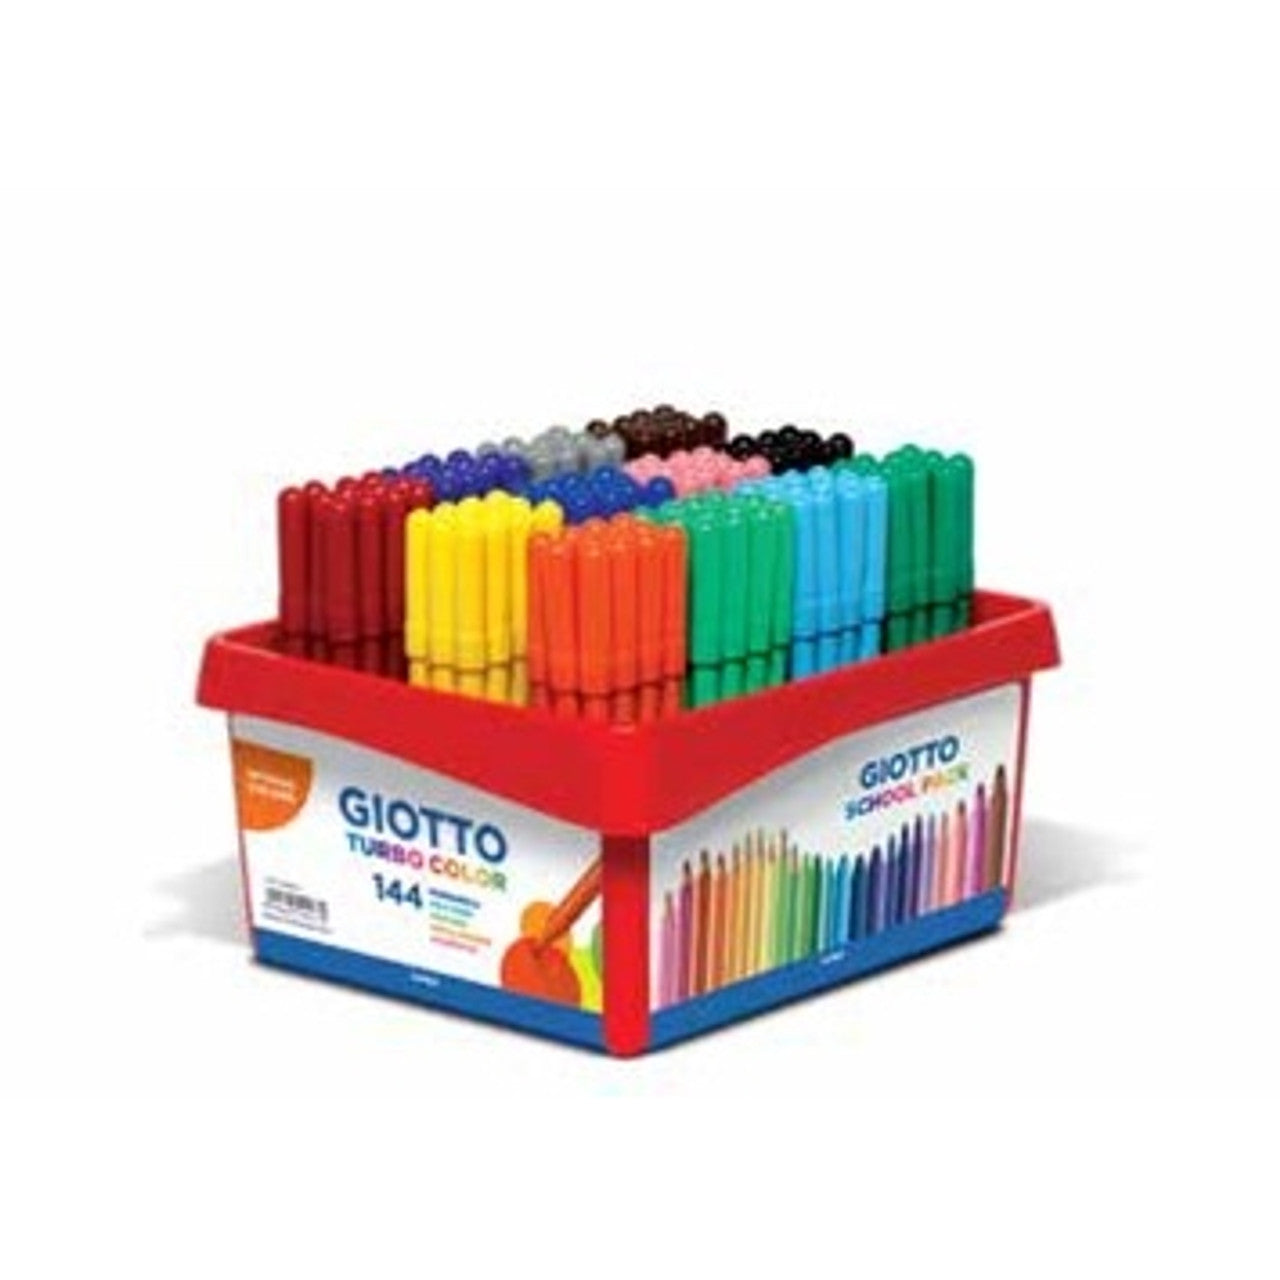 Giotto Turbo Color Schoolpack 144 pcs